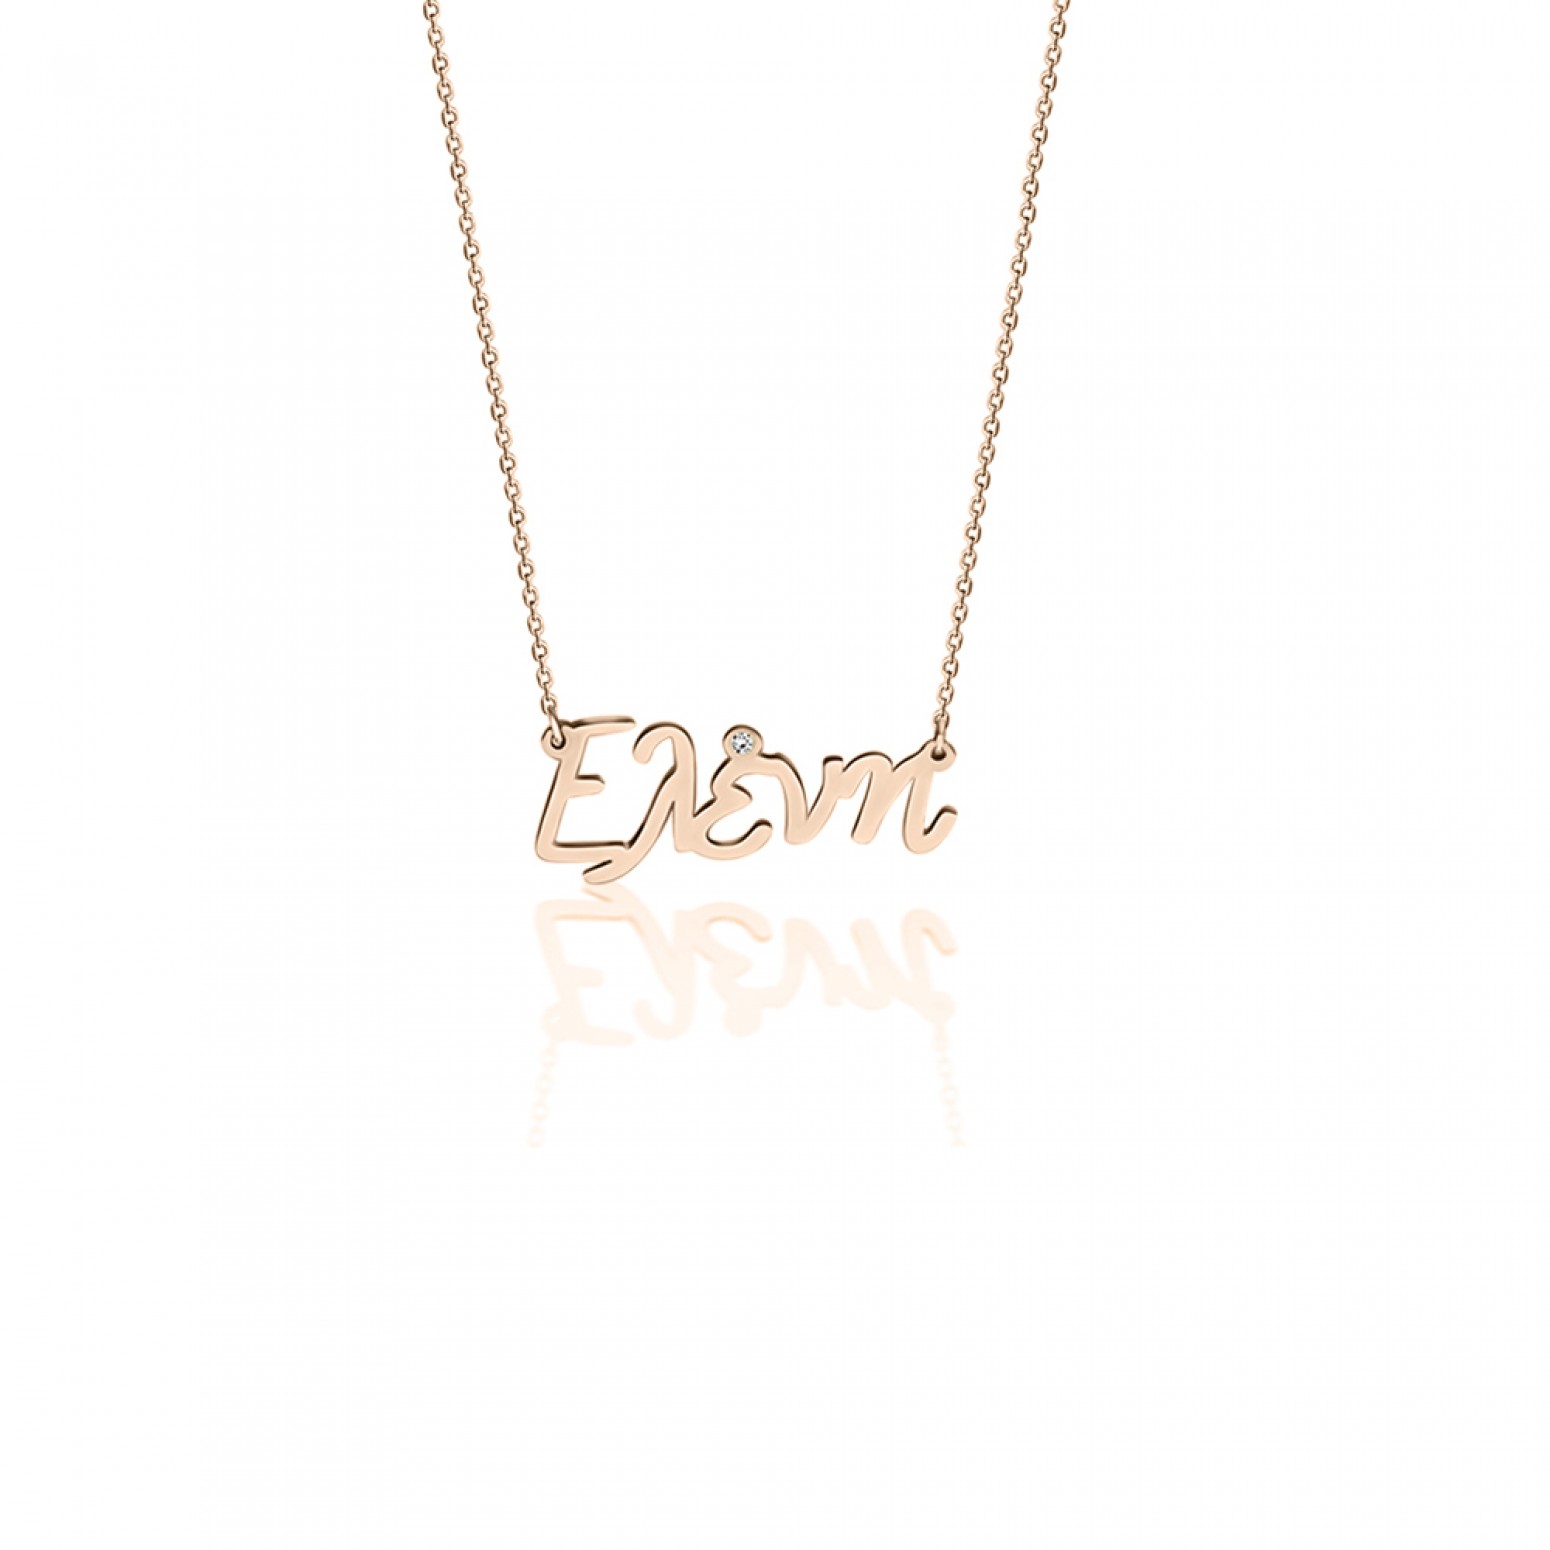 Name necklace Ελένη, Κ14 pink gold with diamond 0.004ct, VS2, H ko5358 NECKLACES Κοσμηματα - chrilia.gr